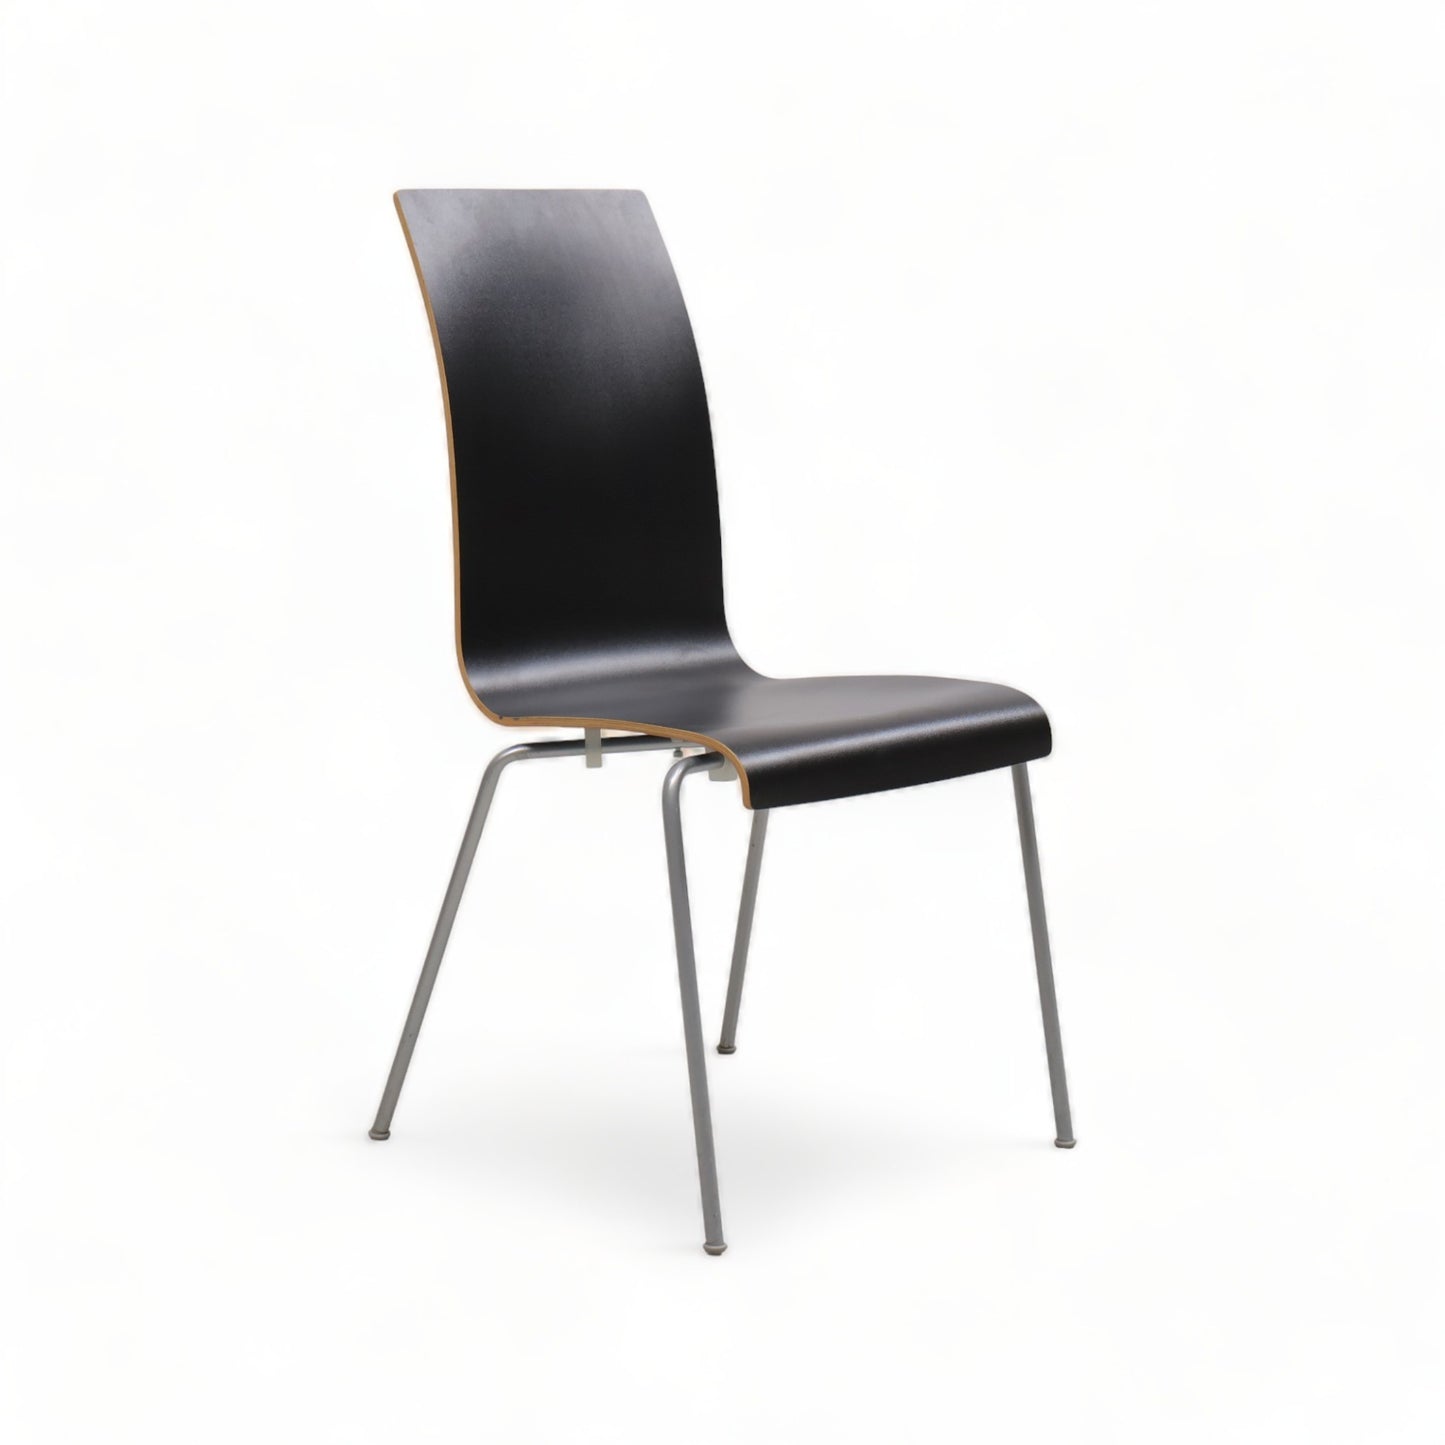 God tilstand | Sort IKEA stol